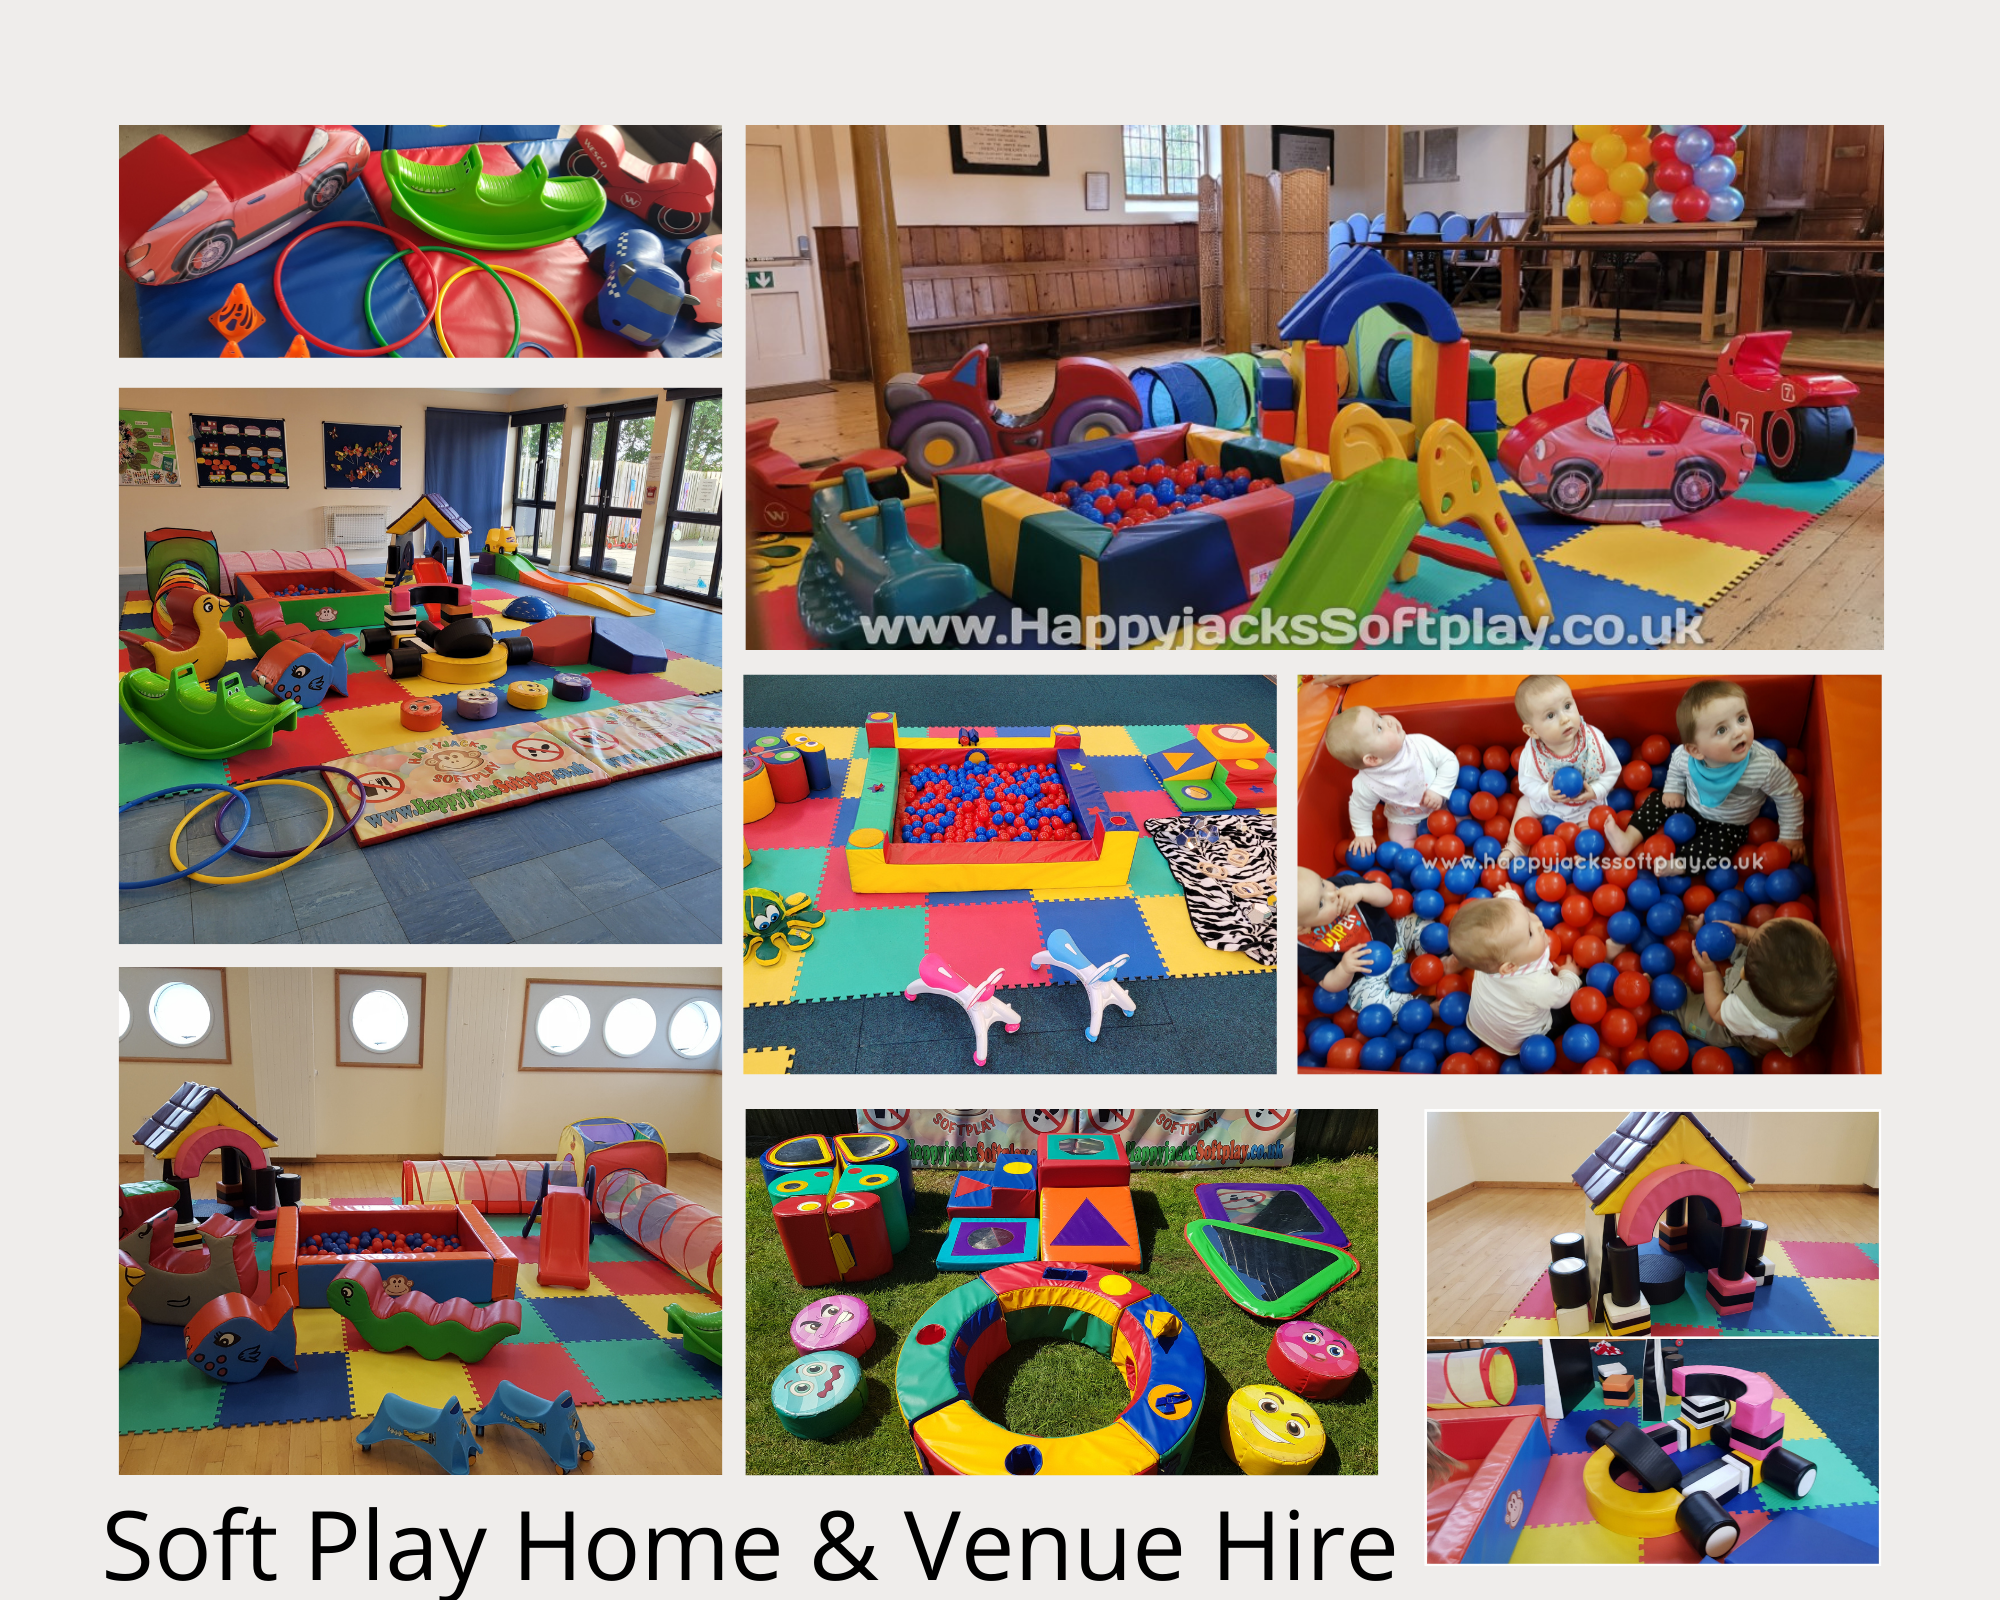 Soft Play Home & Venue Hire